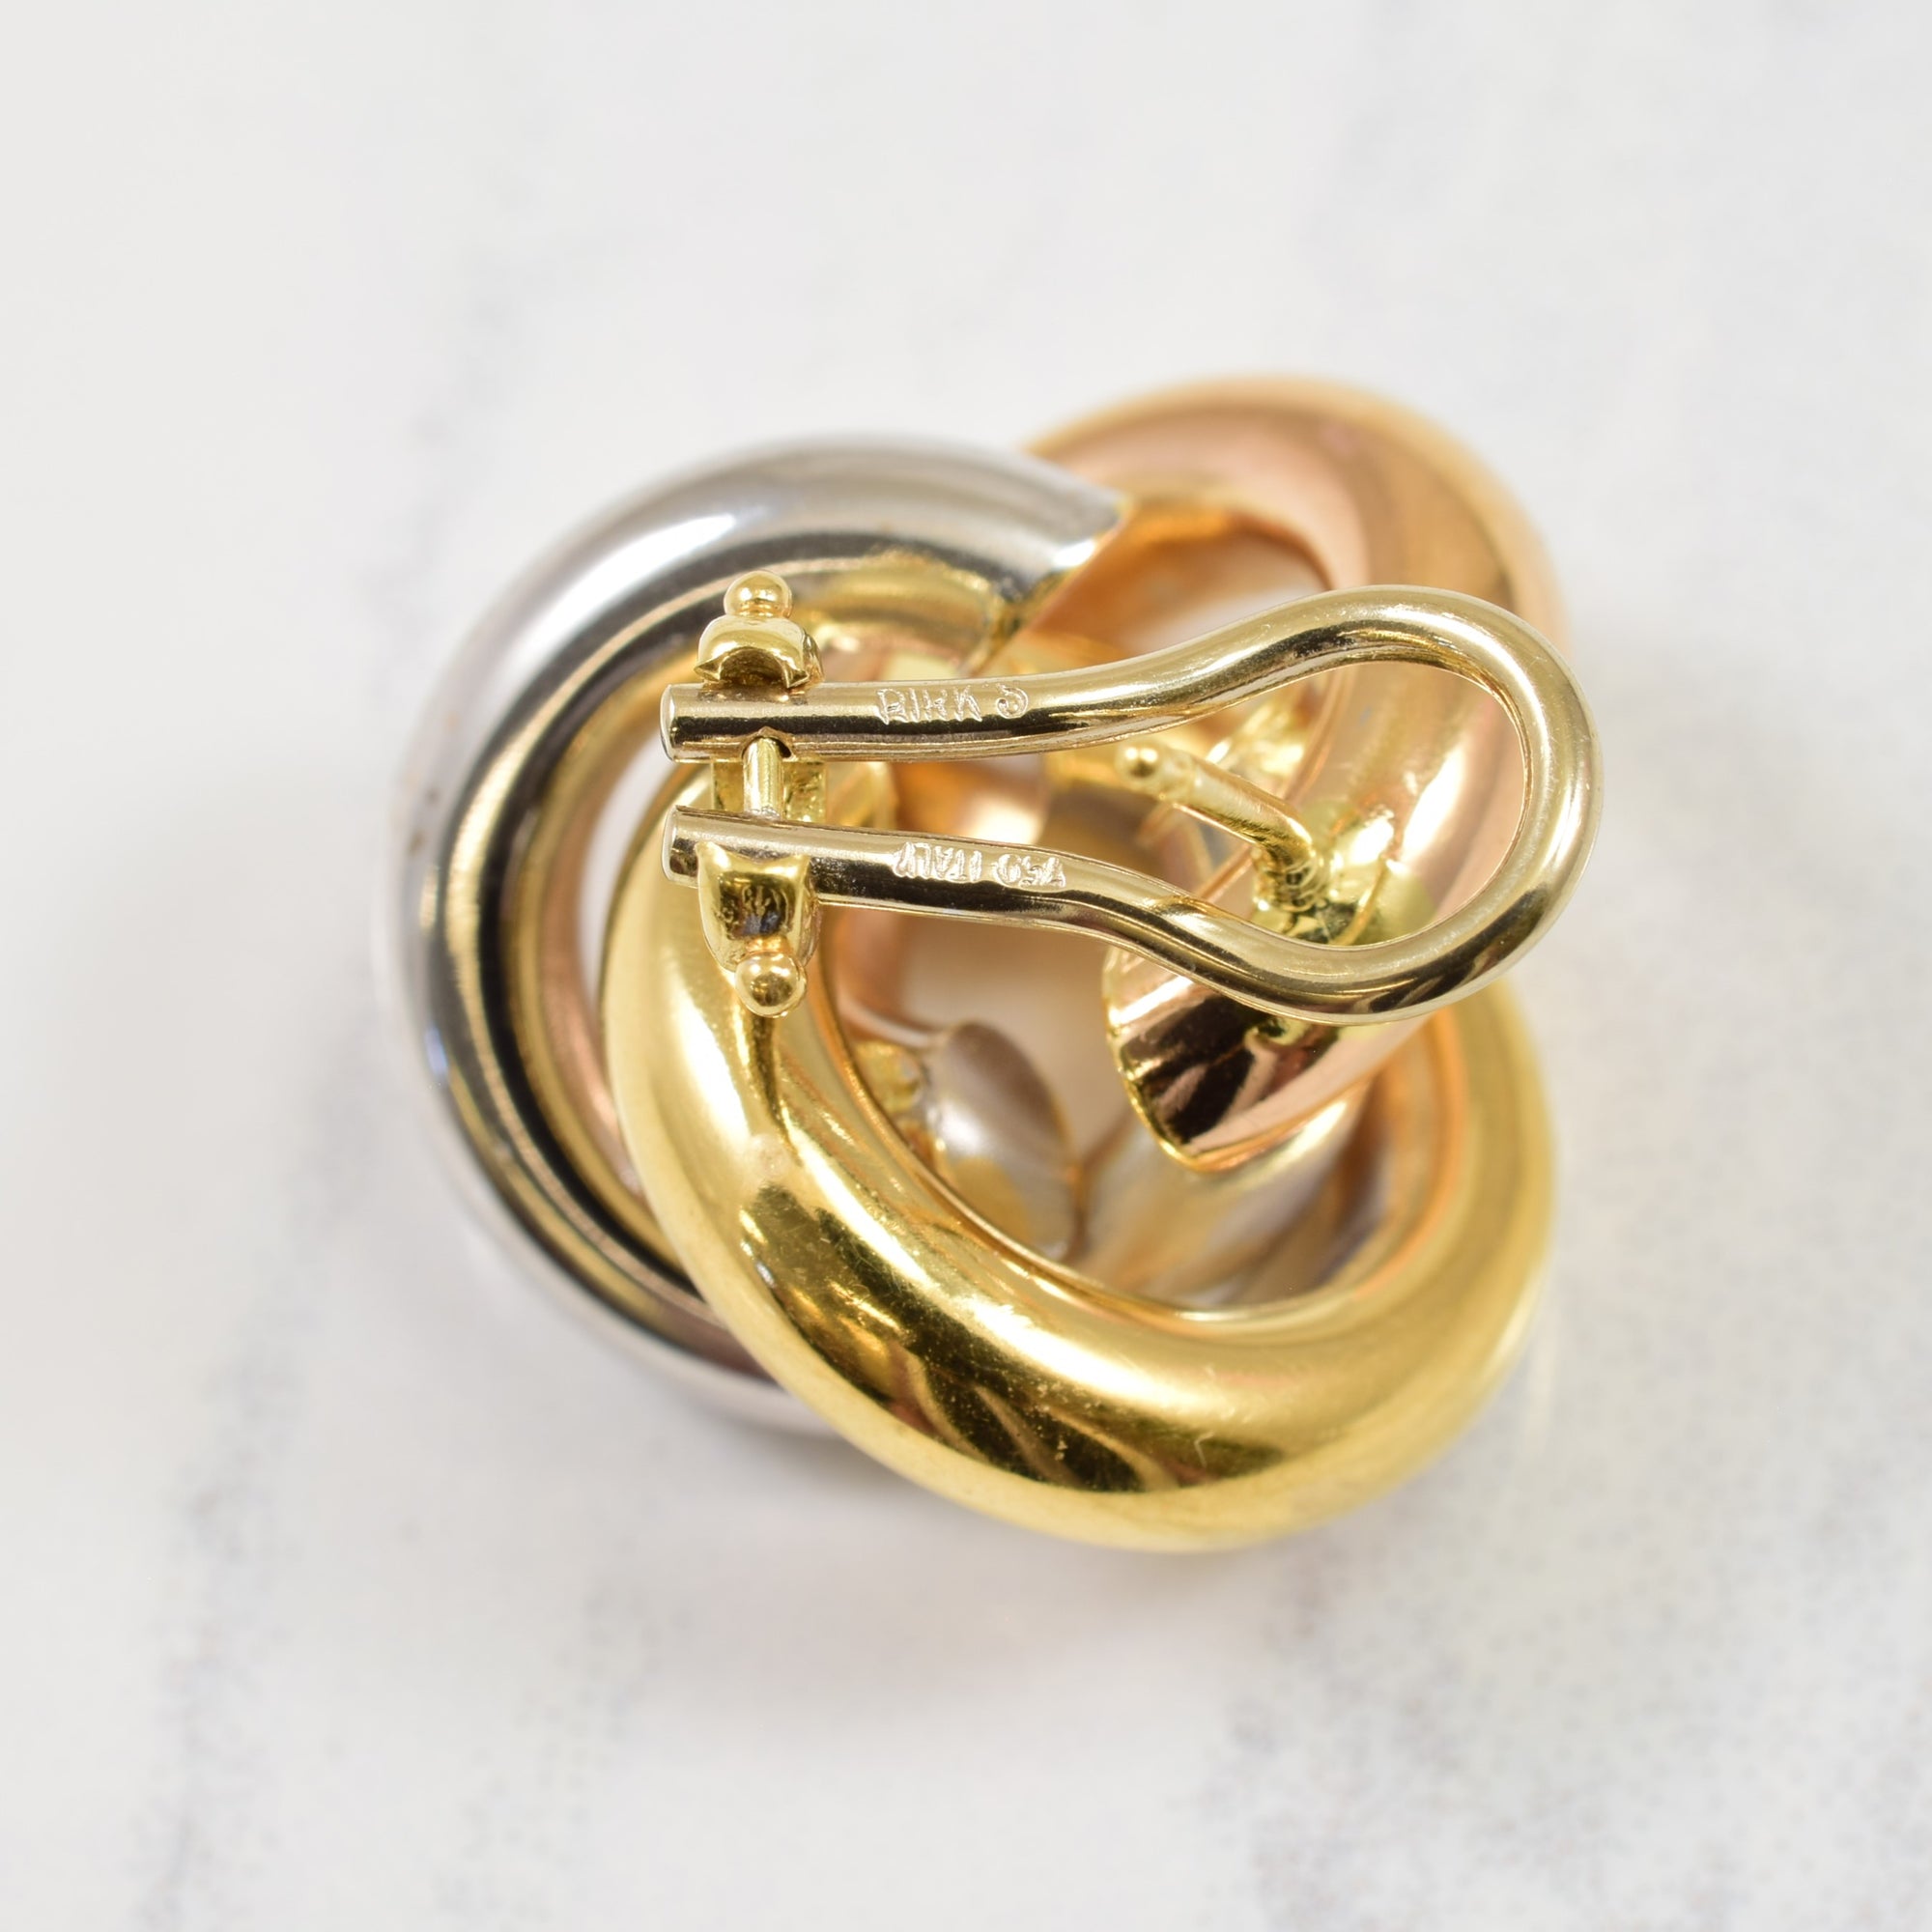 Birks' 18k Tri Toned Gold Interlocking Circle Earrings